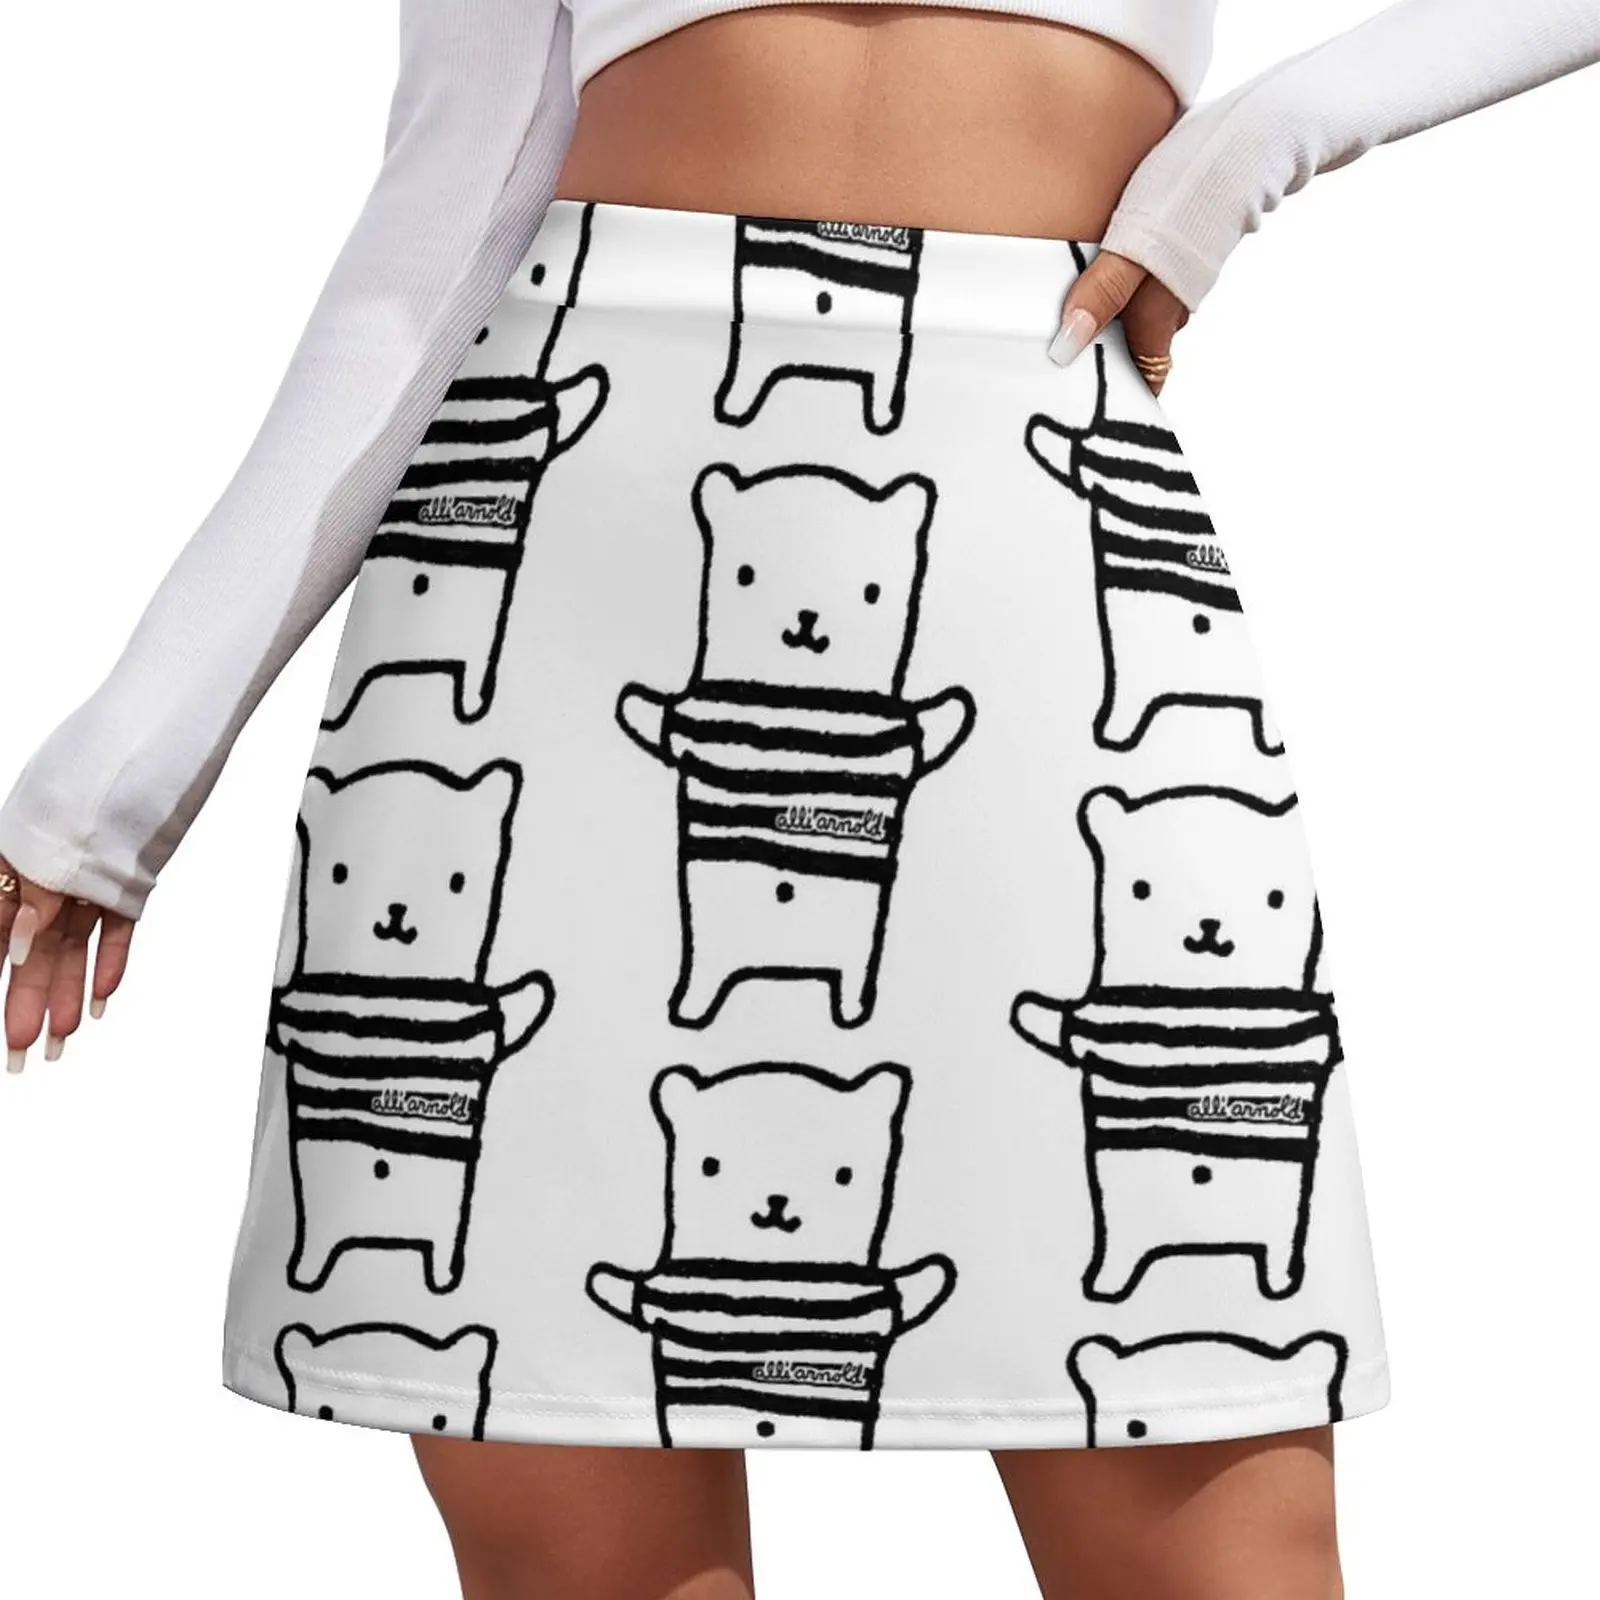 Classic Alli Bear Mini Skirt clothes for woman skorts for women